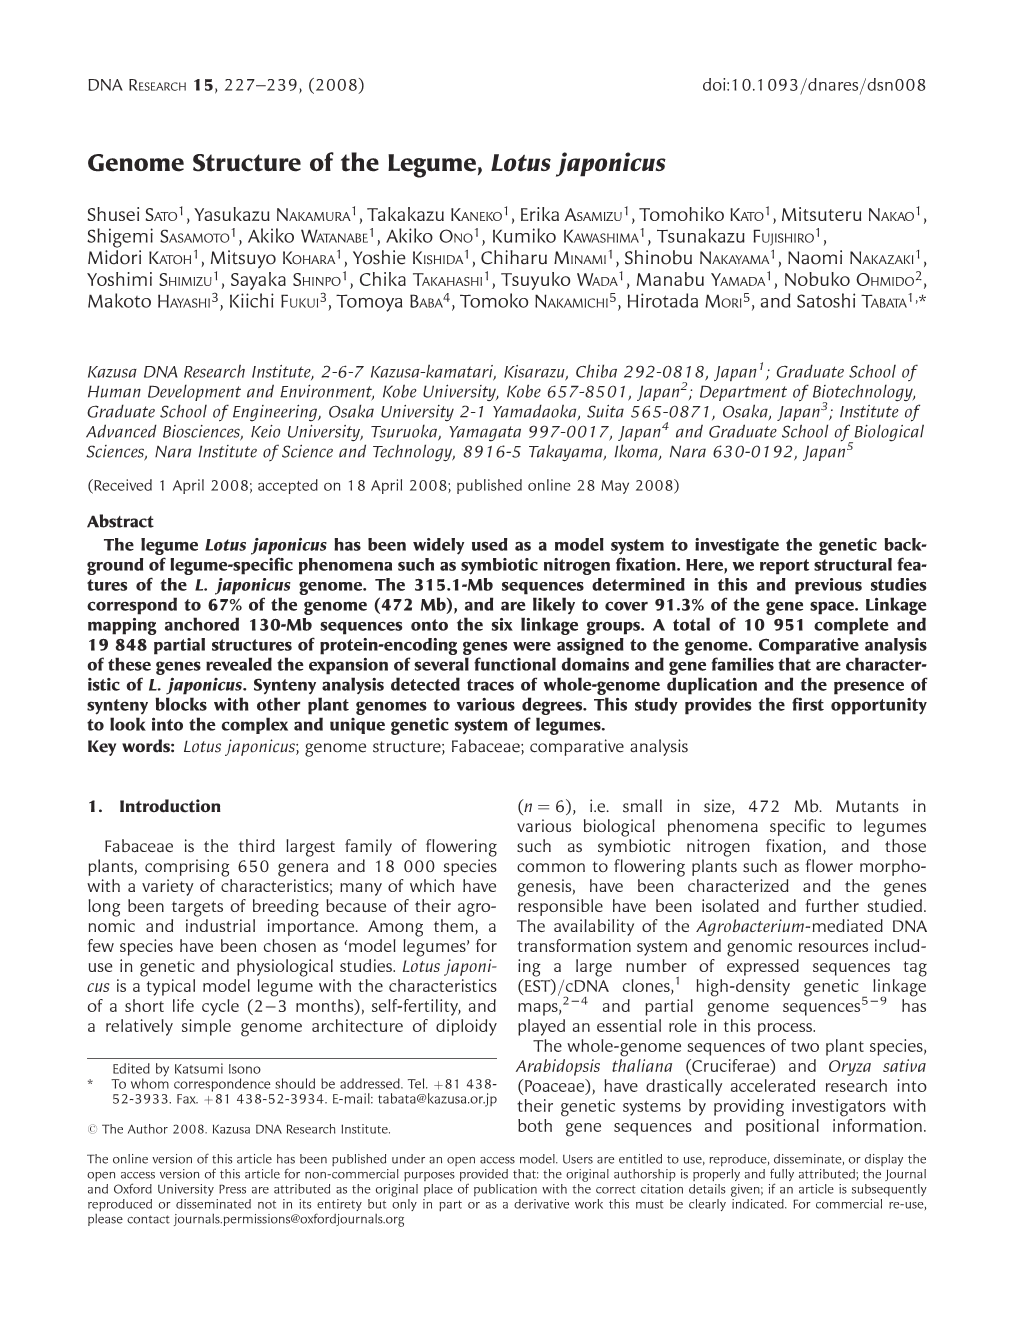 Genome Structure of the Legume, Lotus Japonicus